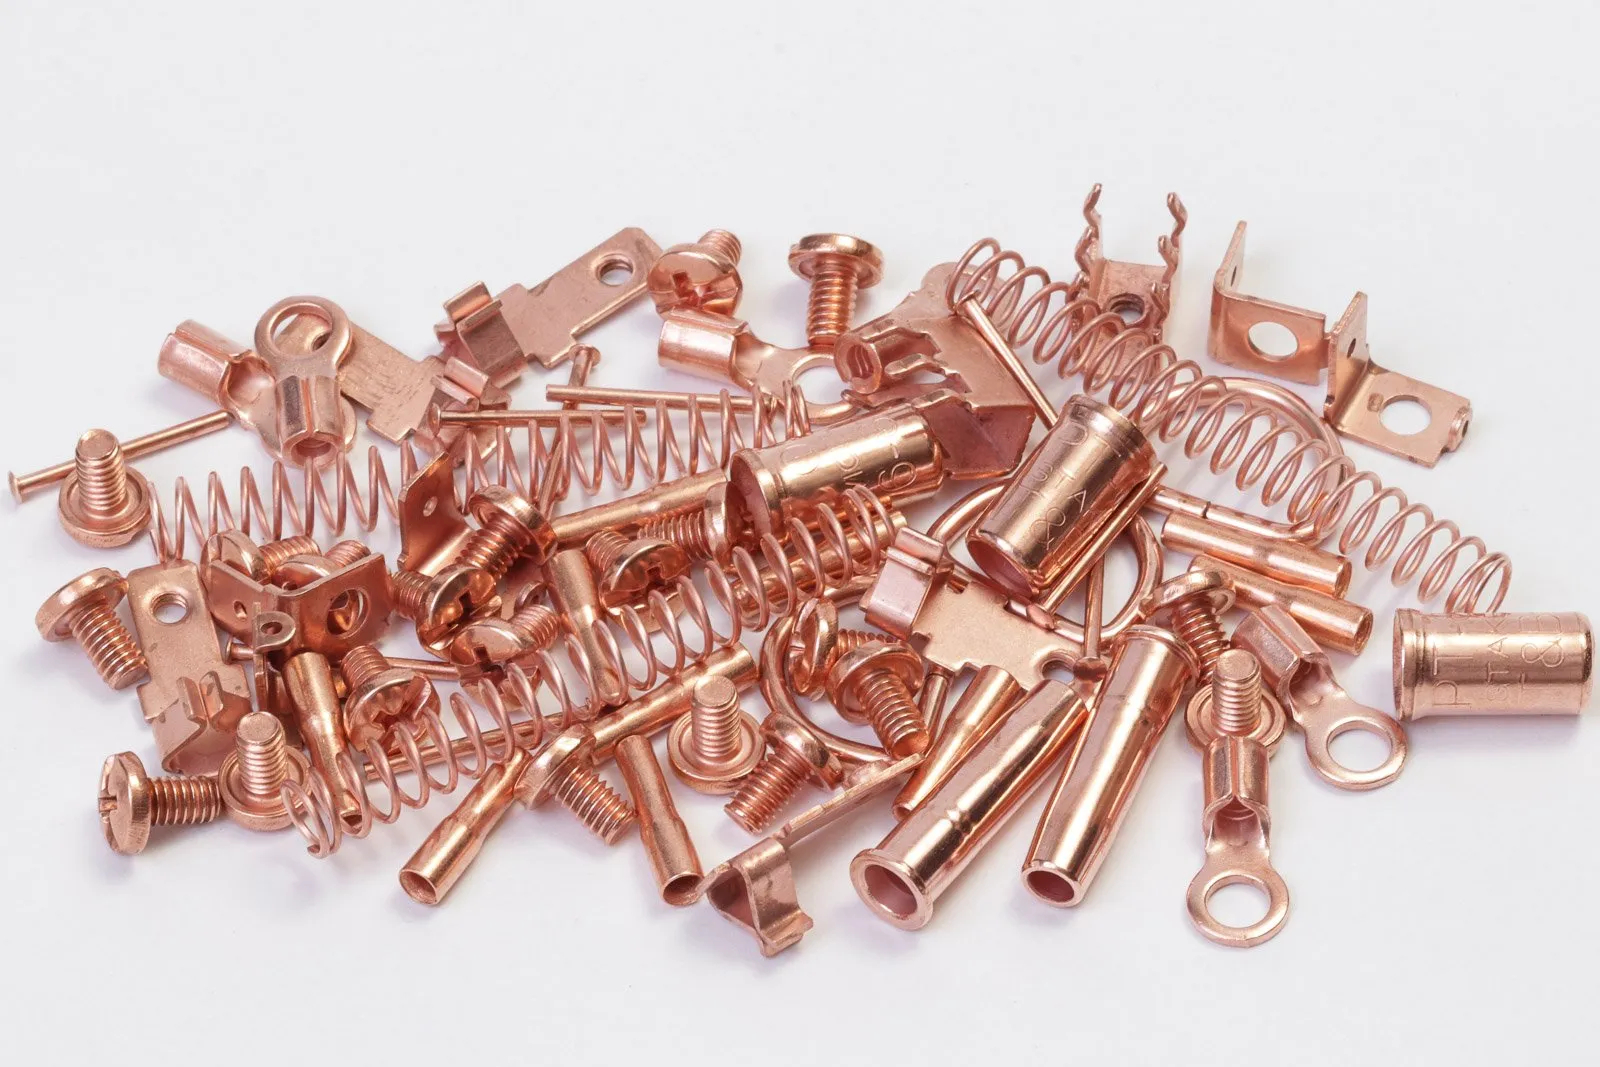 copper plating